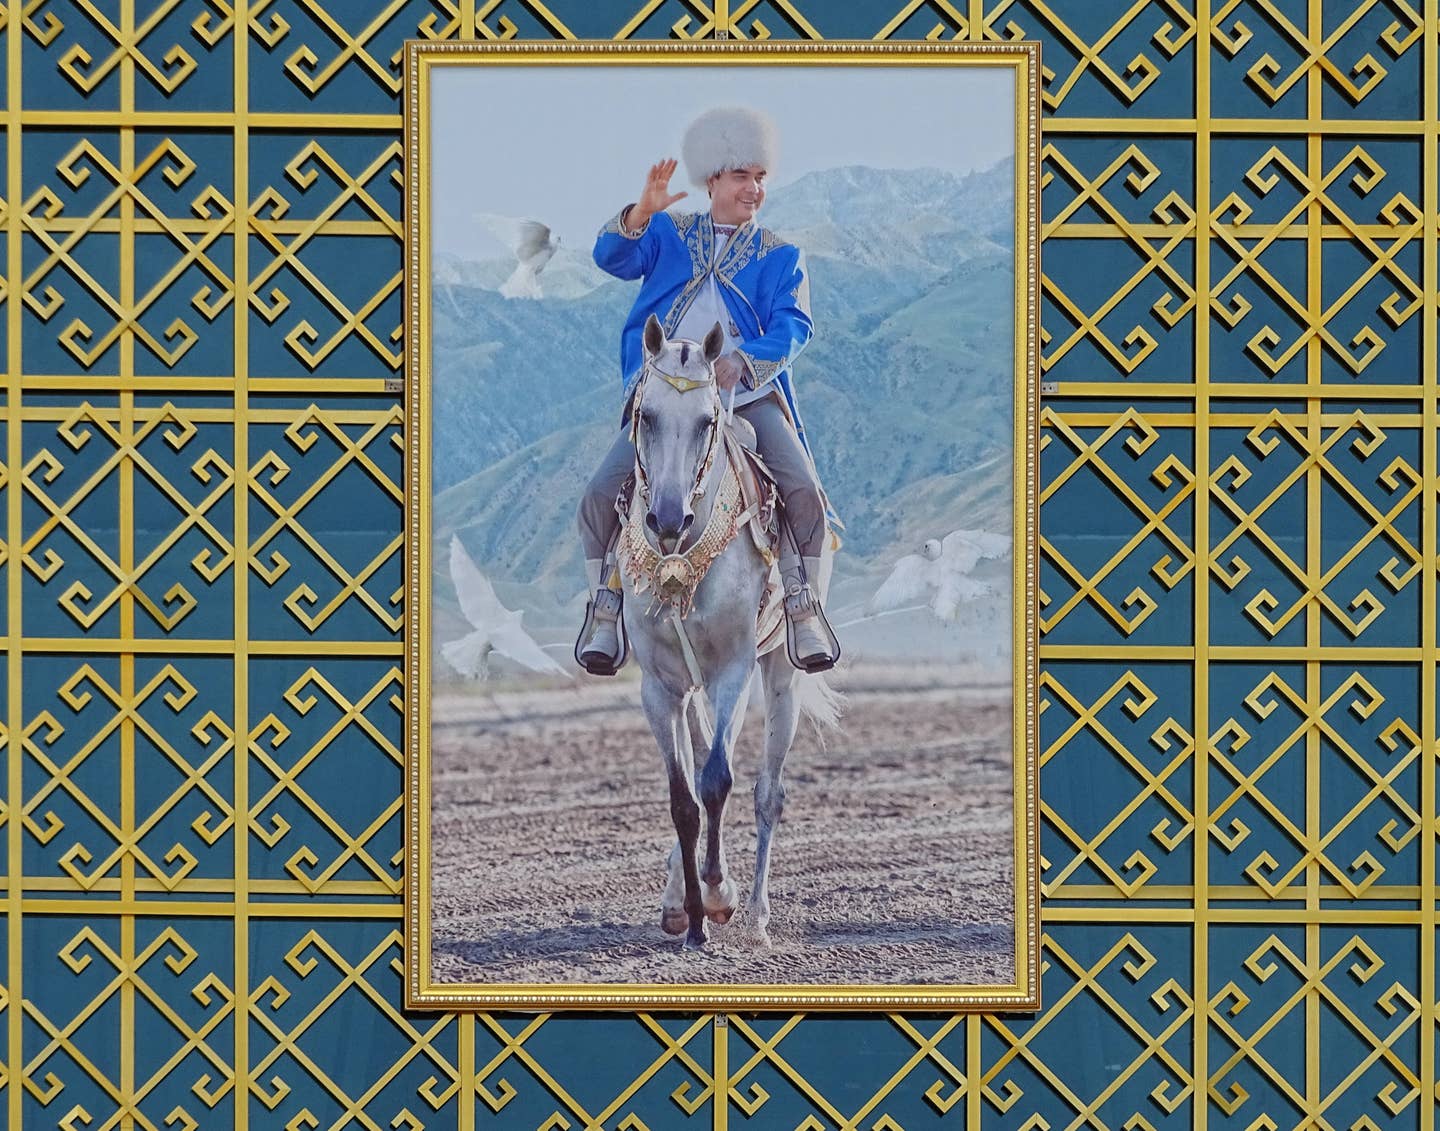 Has anyone seen the Turkmen president lately?